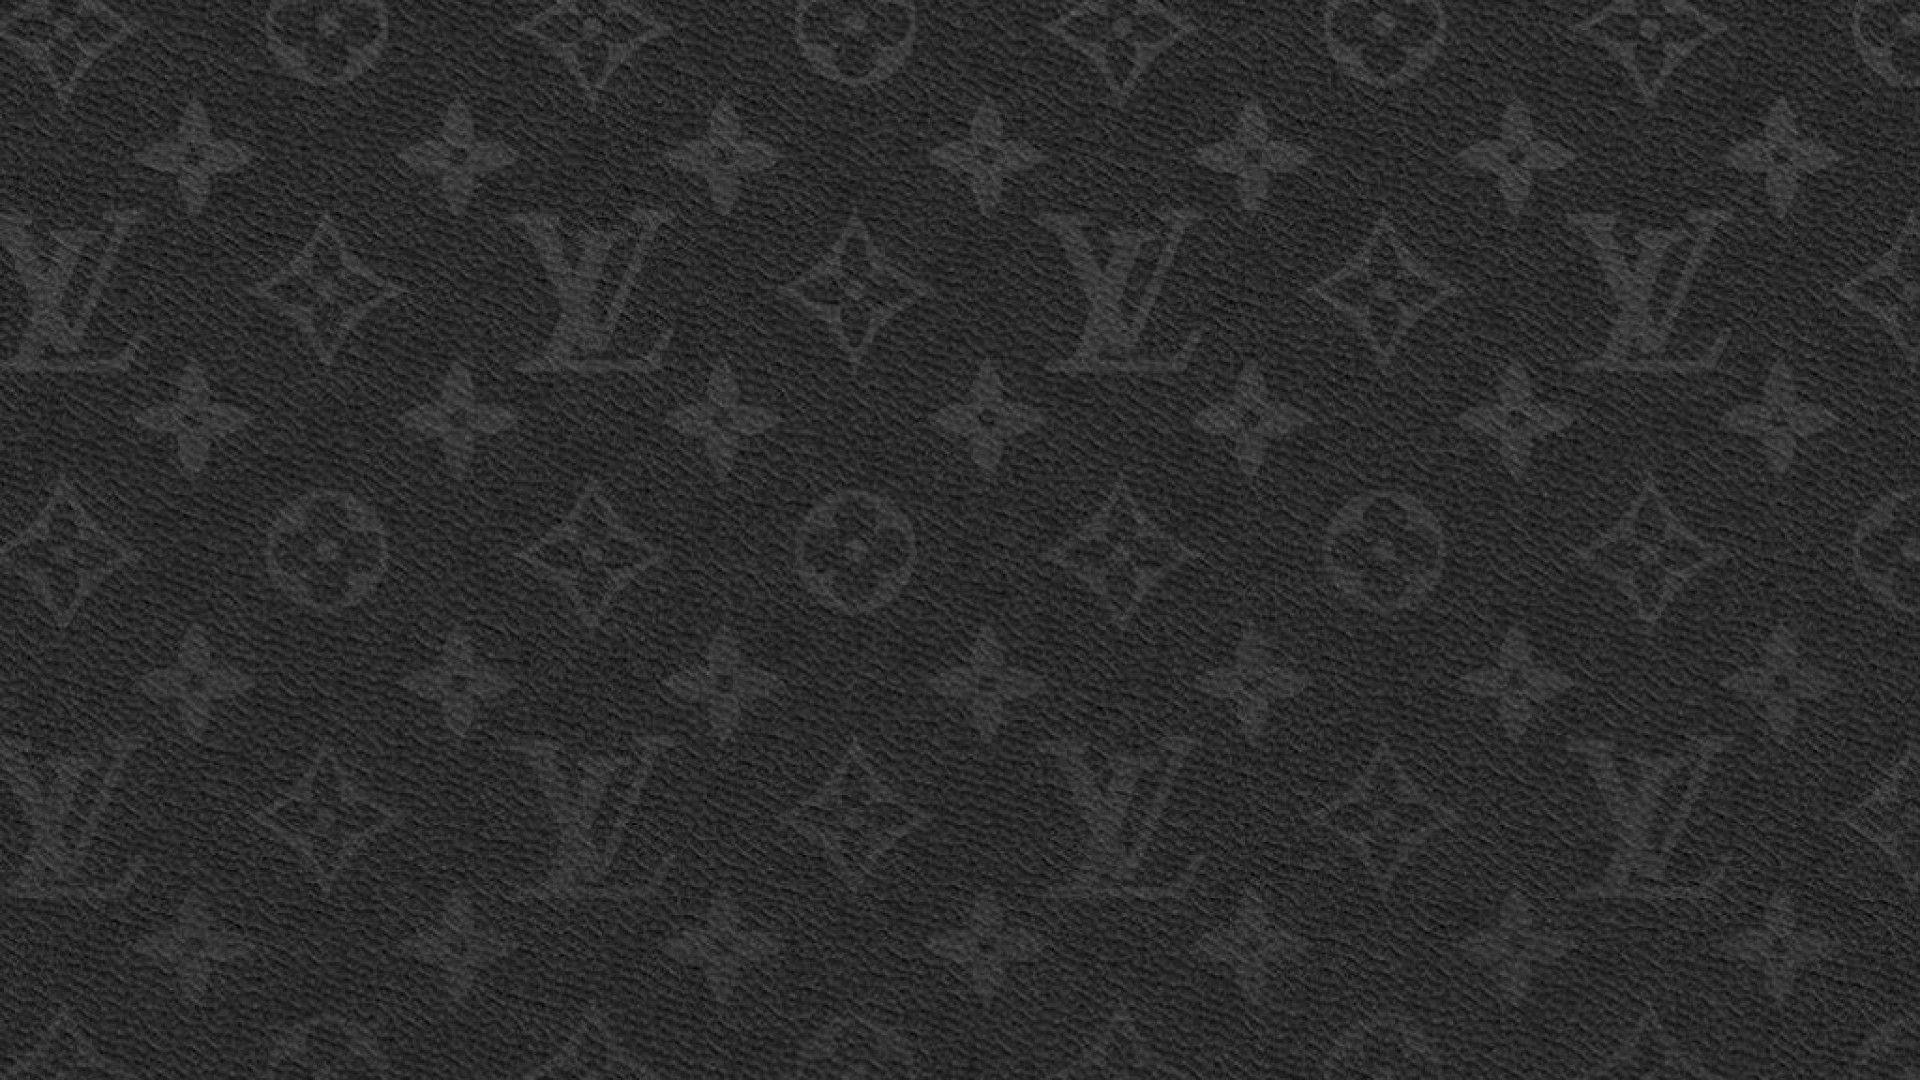 Louis Vuitton Black And White Desktop Wallpapers - Wallpaper Cave